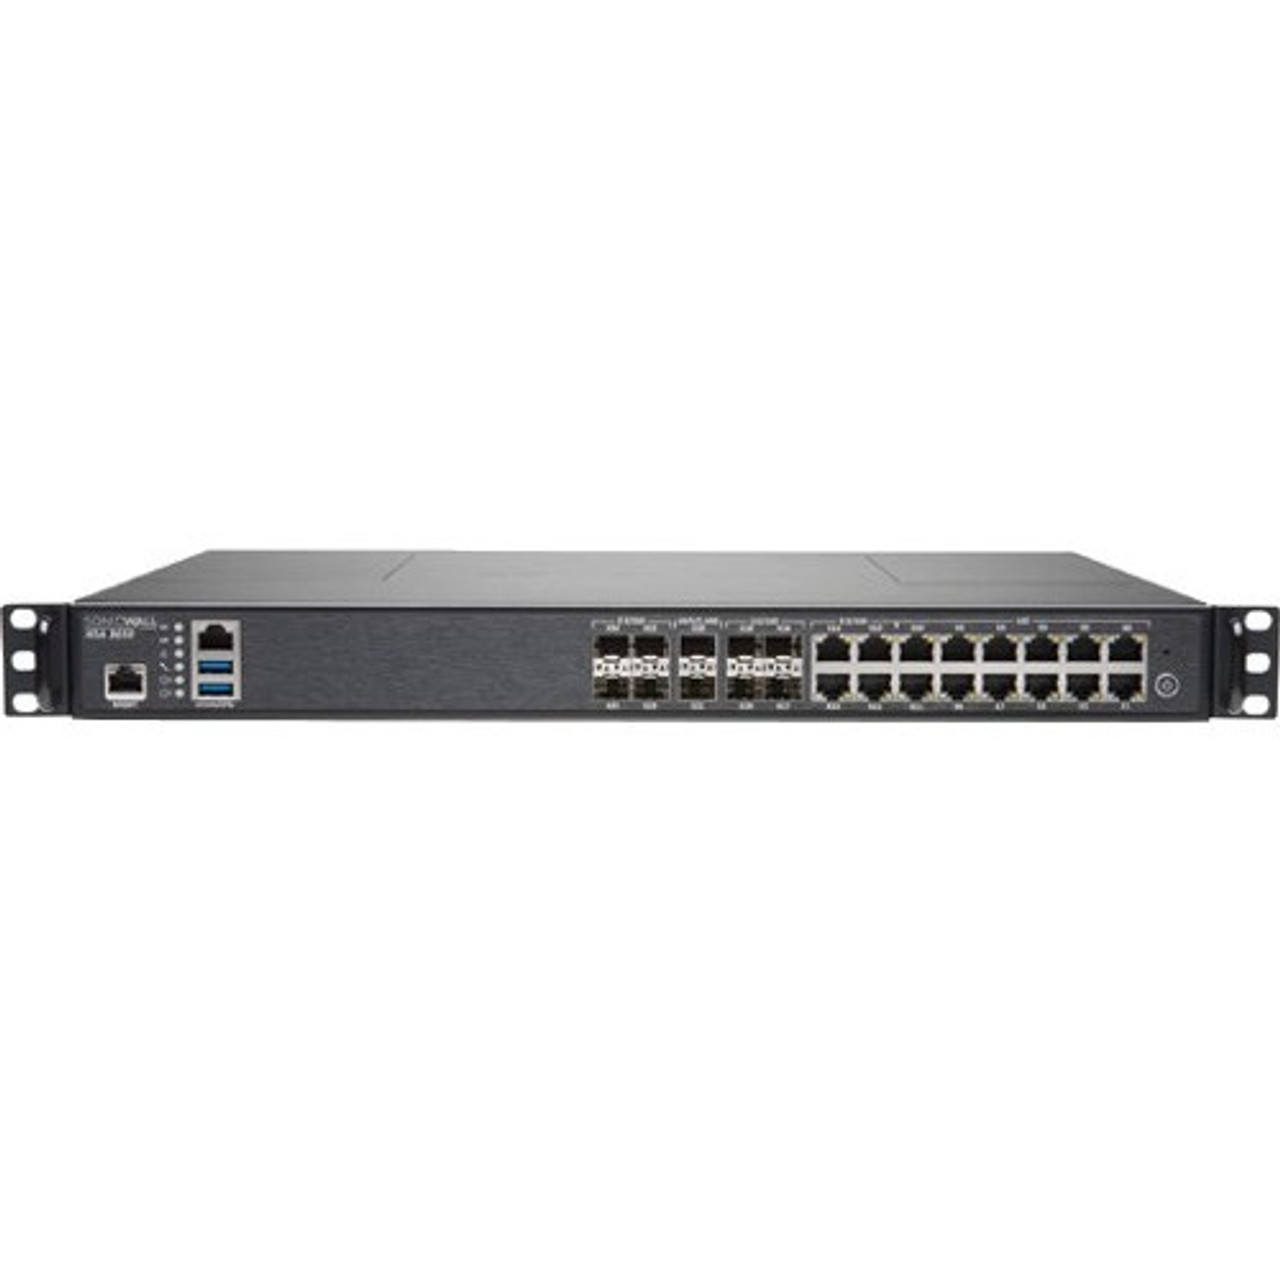 01-SSC-1937 SonicWall NSA 3650 Network Security/Firewall Appliance 16 Port 1000Base-T, 10GBase-X Gigabit Ethernet DES, 3DES, AES (128-bit), AES (192-bit), AES